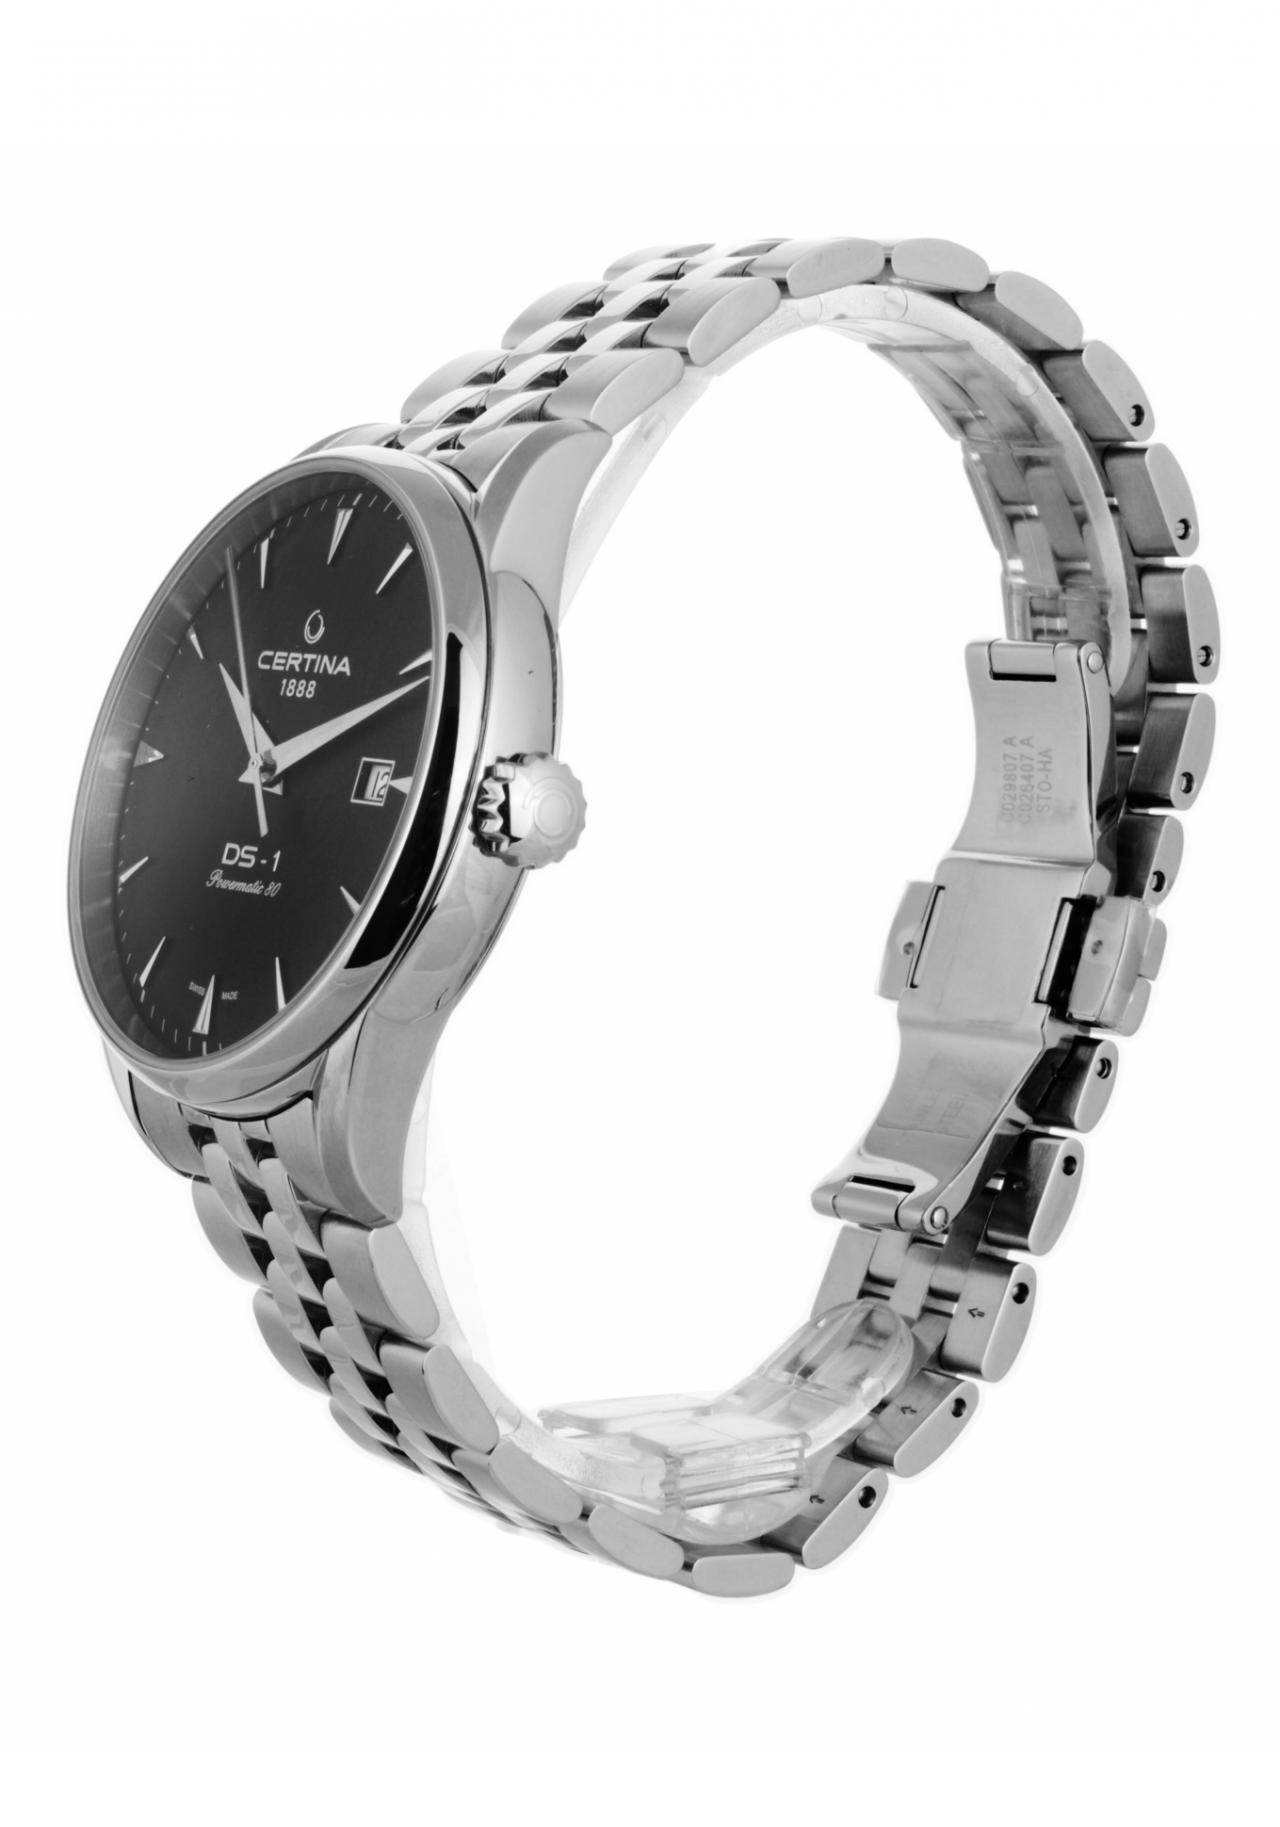 Certina DS-1 Men´s-Automatic Watch C029.807.11.051.00 nur 695.00